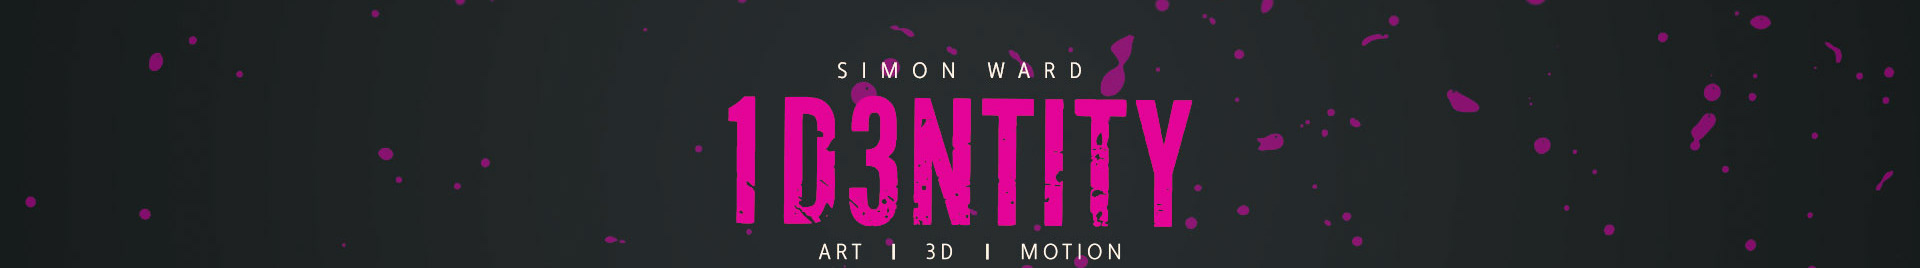 Simon Ward's profile banner